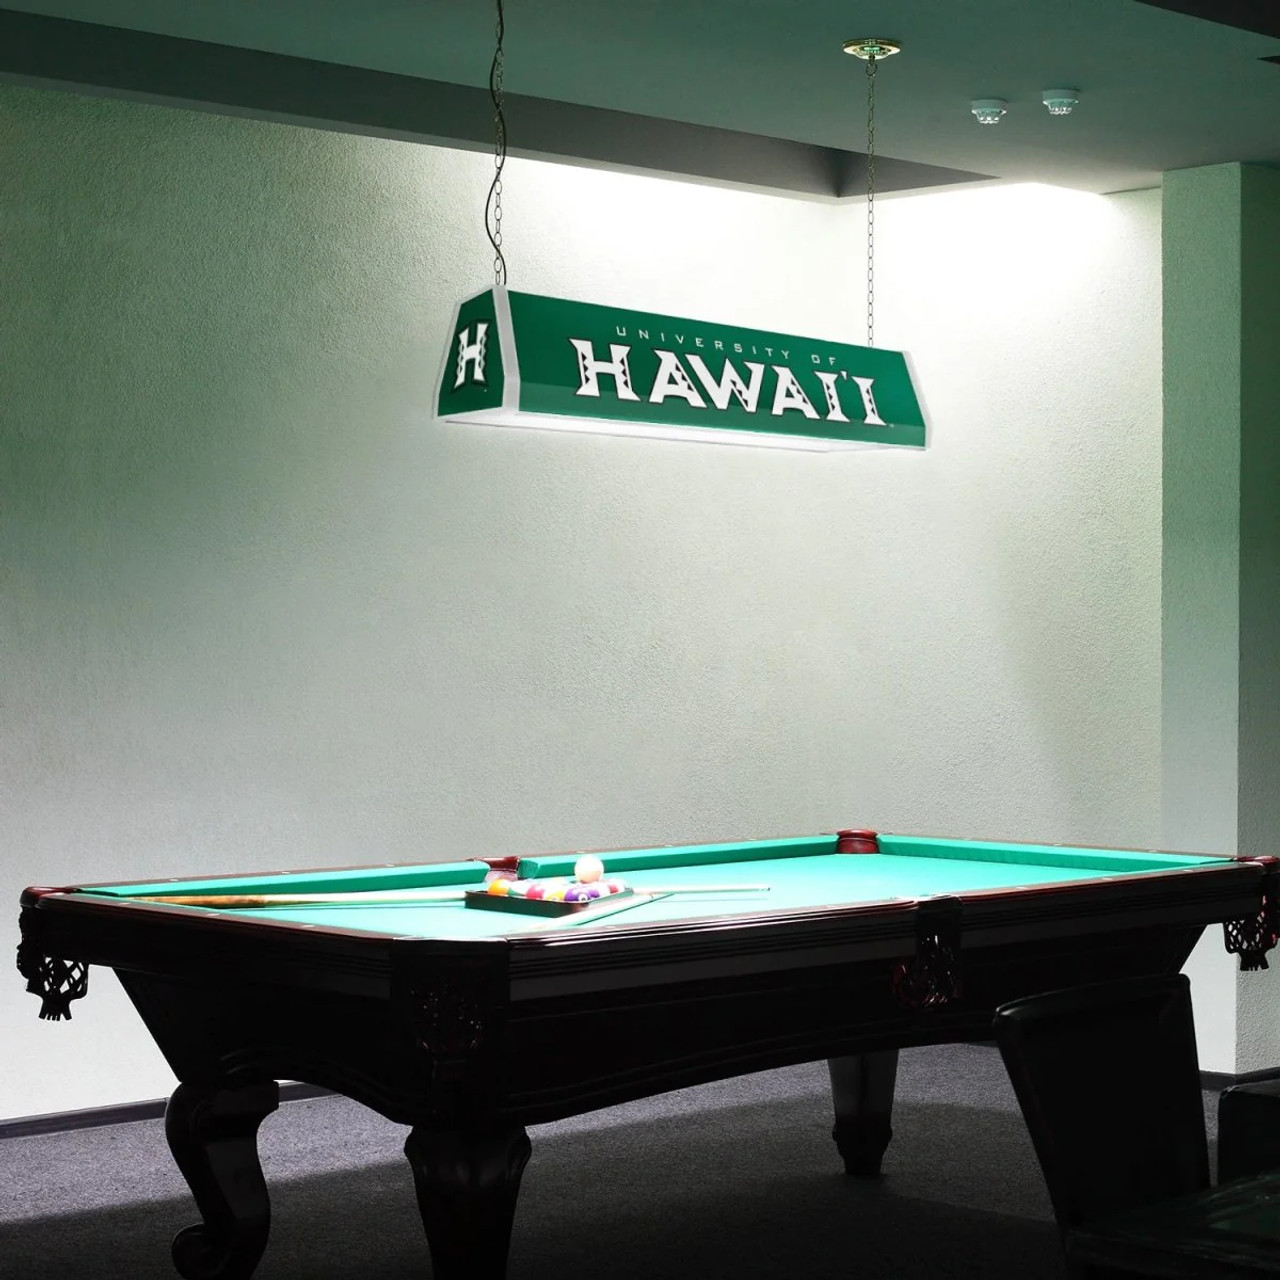 Hawaii, Warriors, University of, Standard, Billiard, Pool, Table Light, 2-Colors, Black, Red, Logo, NCHWIW-310-01, The-Fan Brand, 737547360013